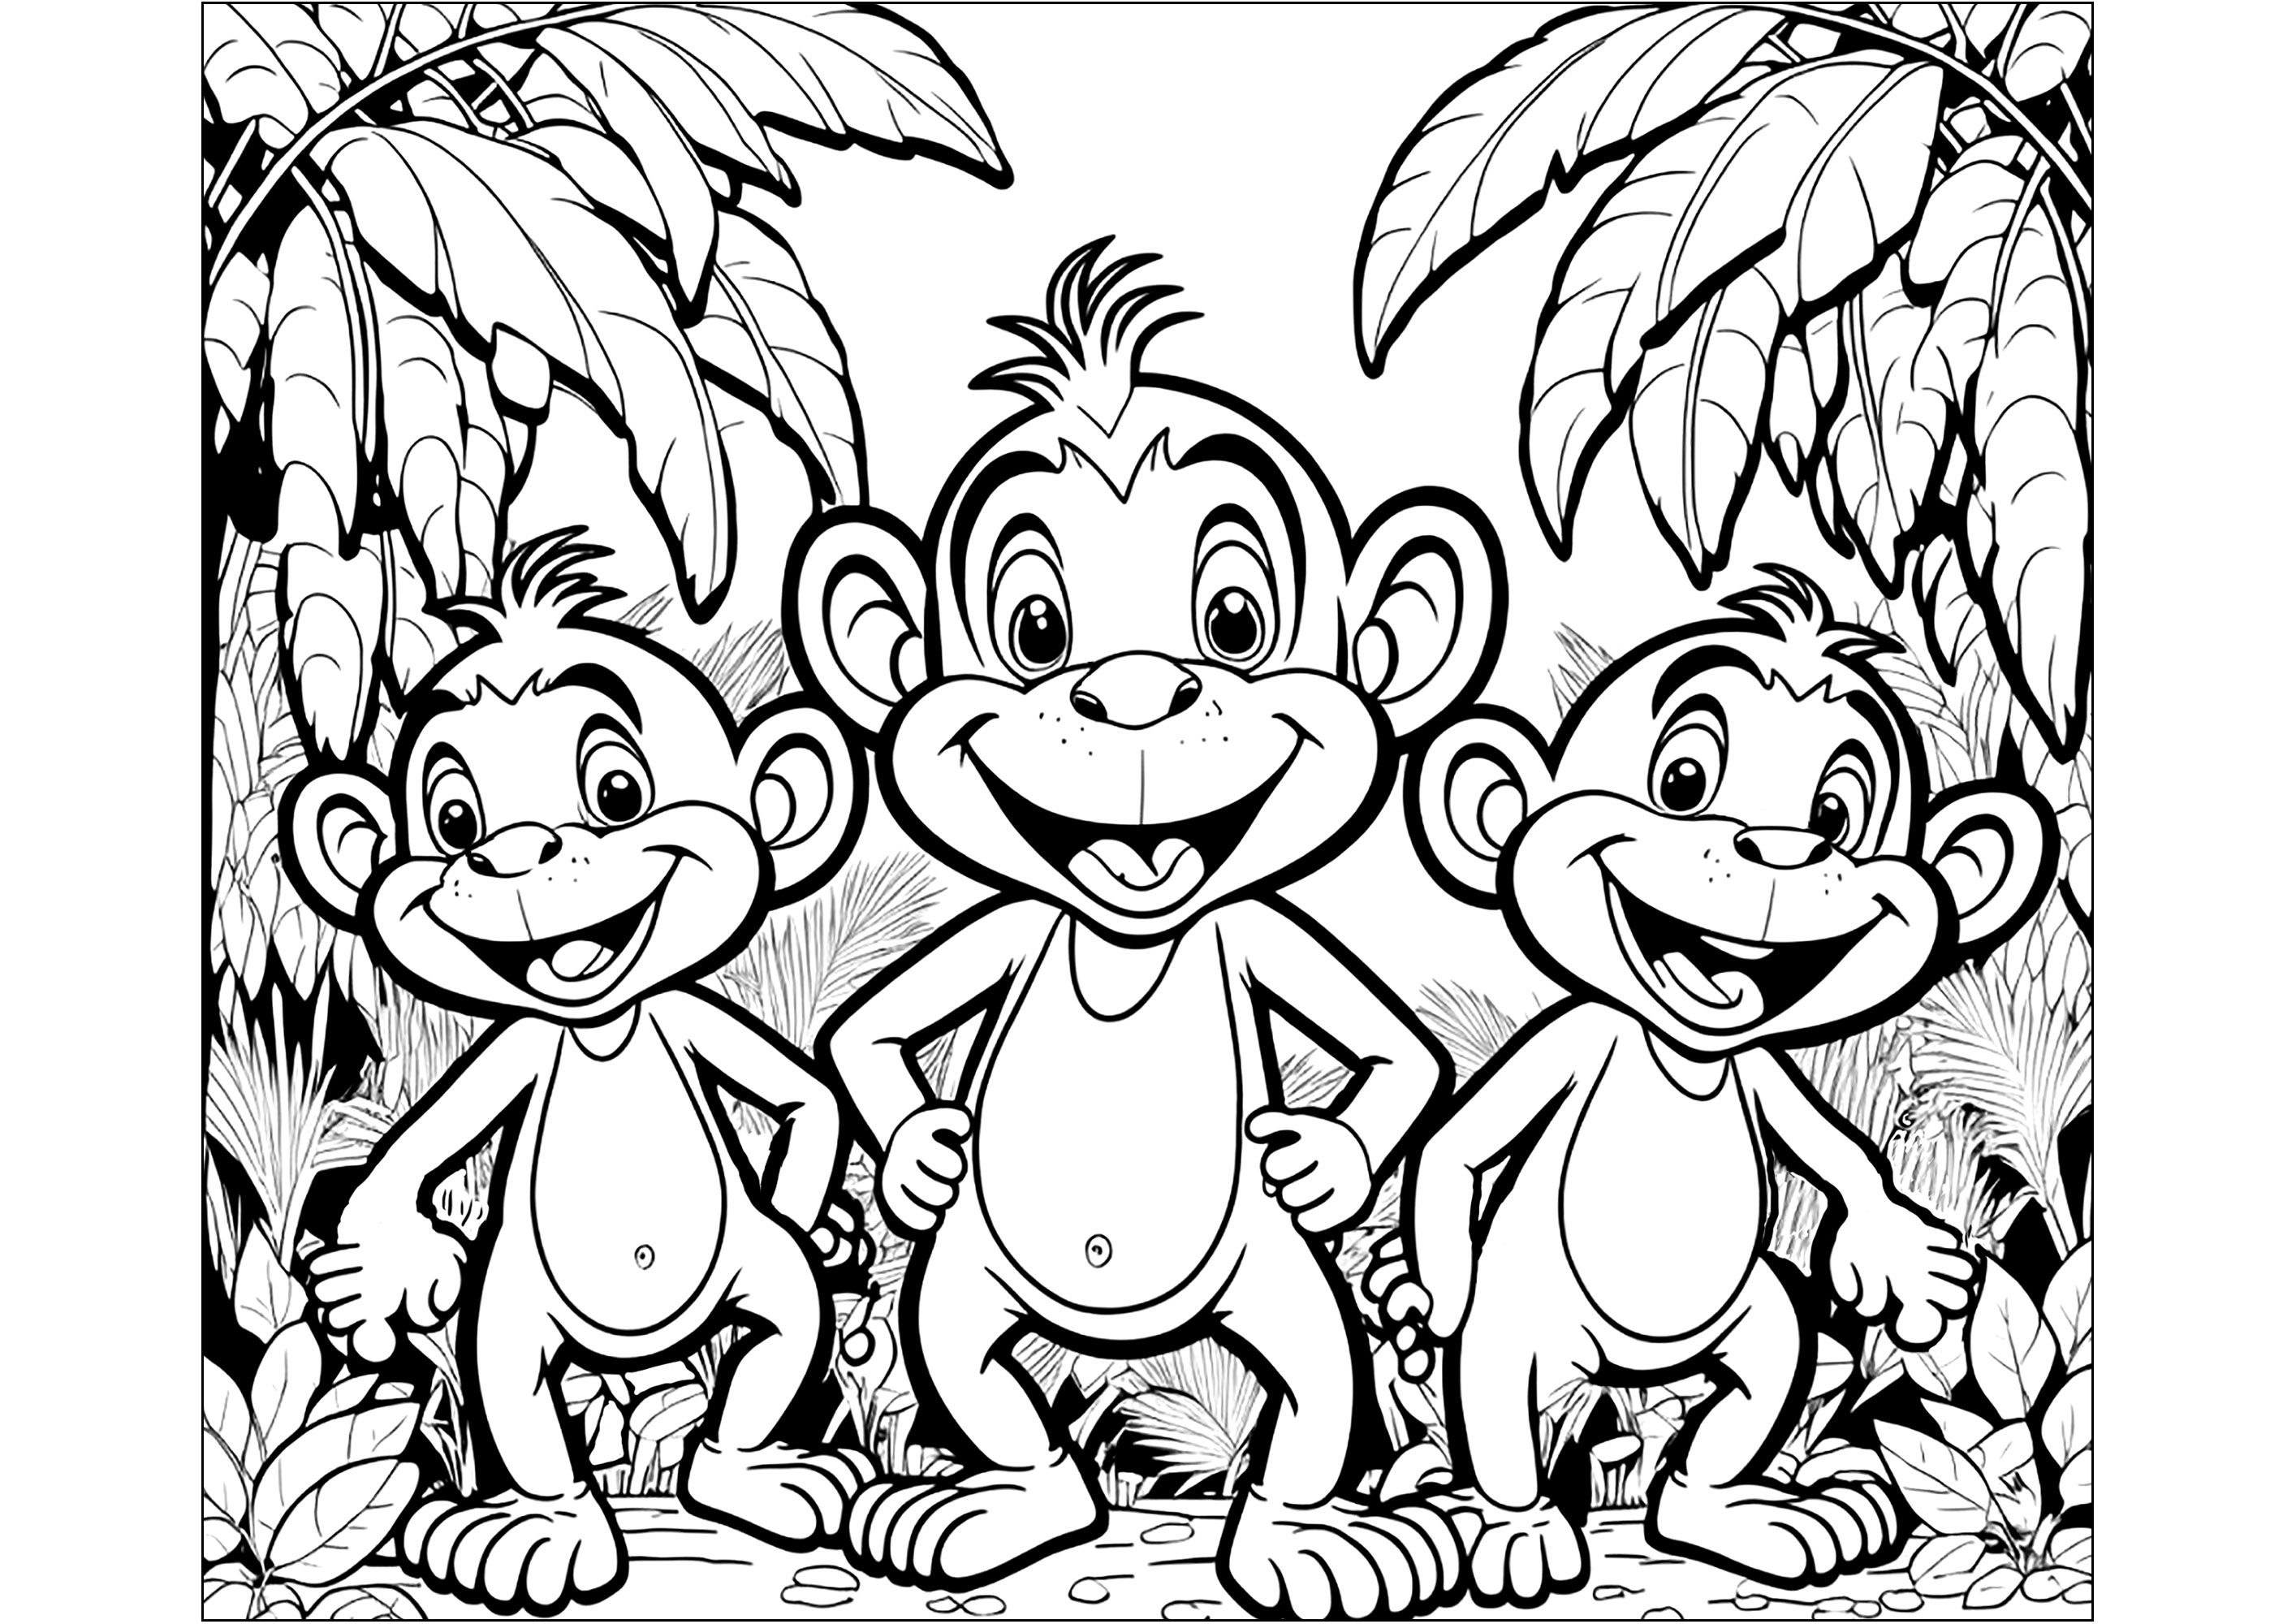 Three young monkeys